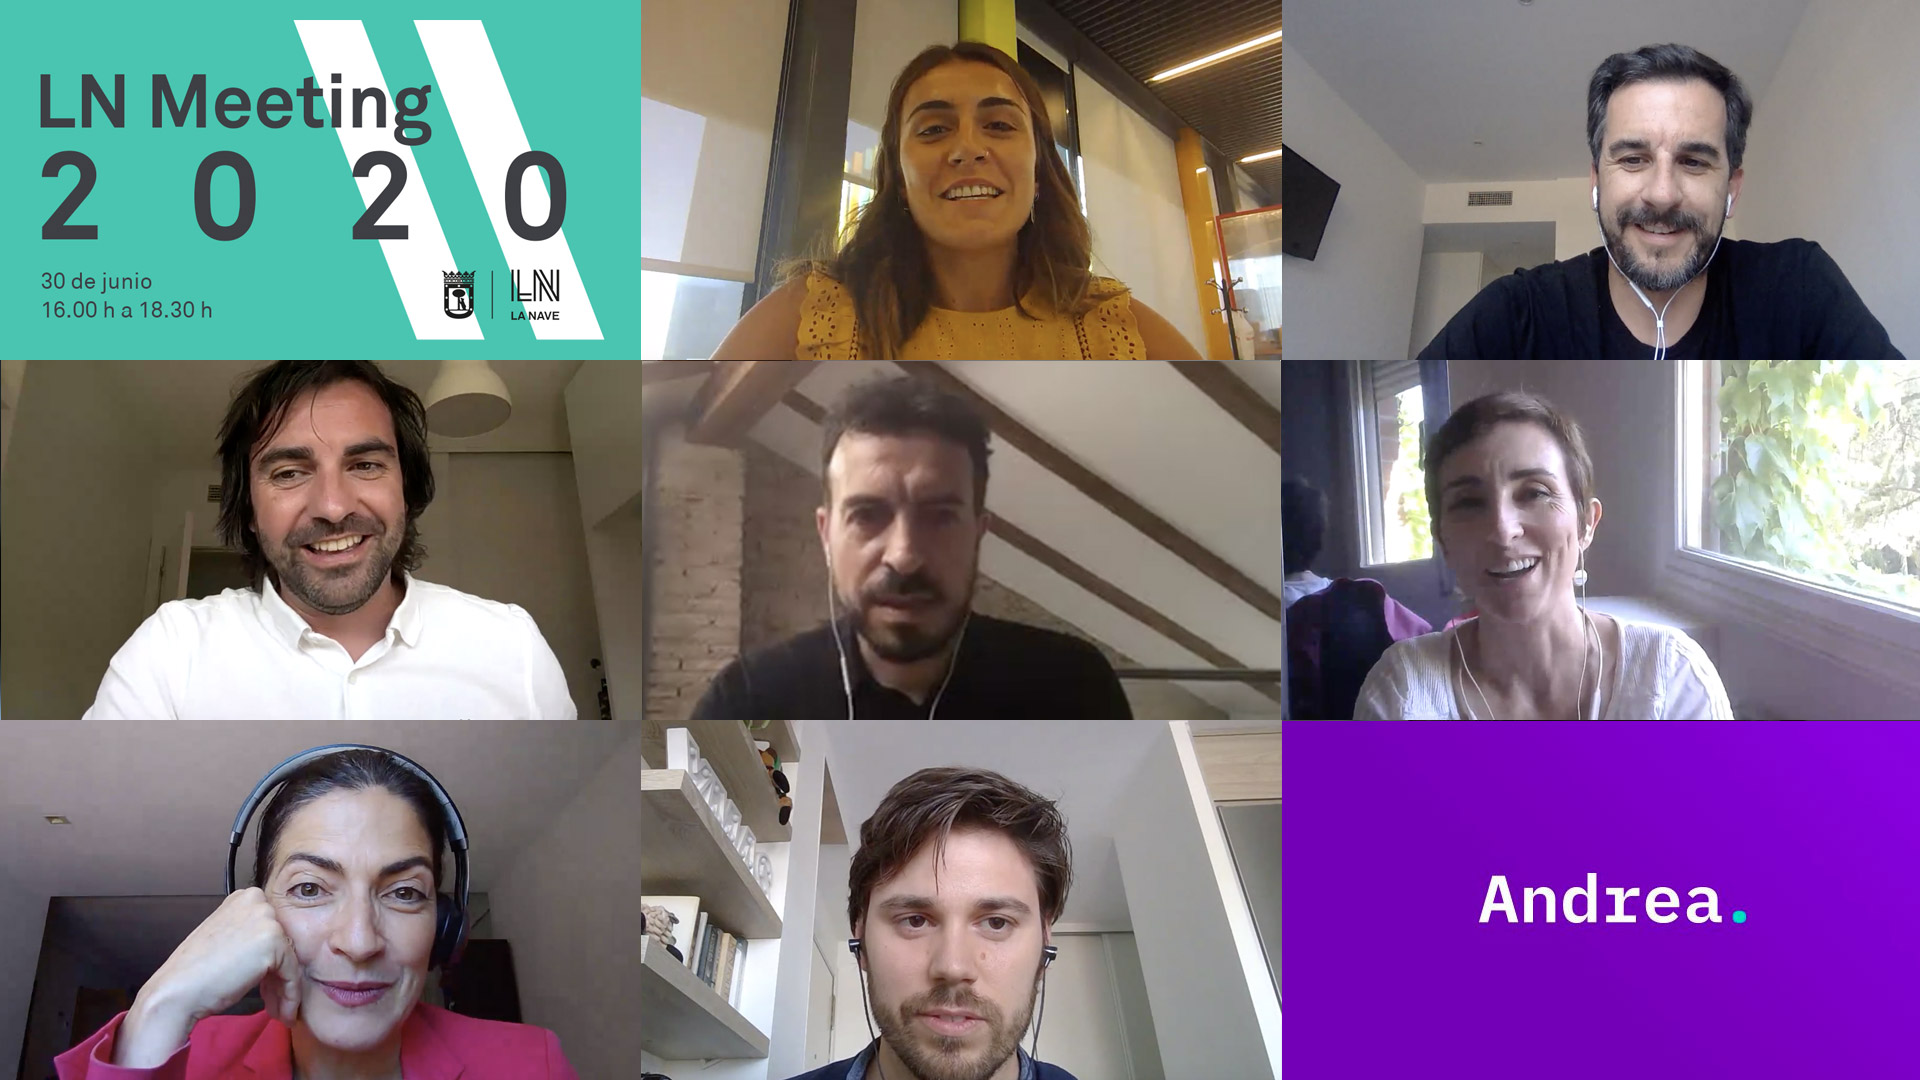 Andrea app, winner startup of the La Nave 2020 acceleration program